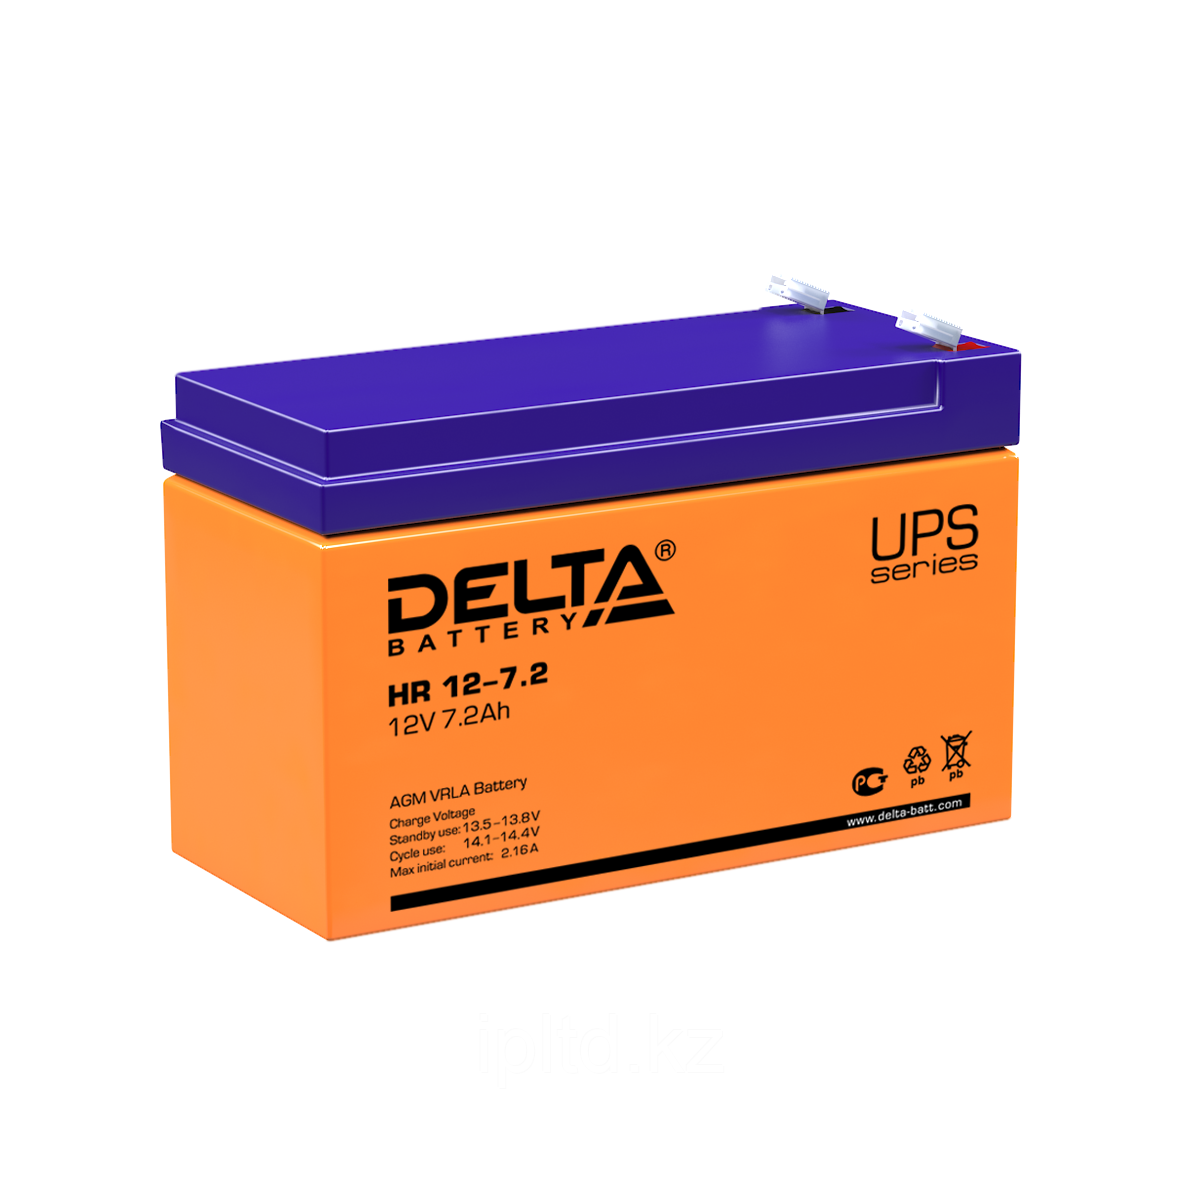 Delta аккумуляторная батарея HR12-7.2 (8 лет)